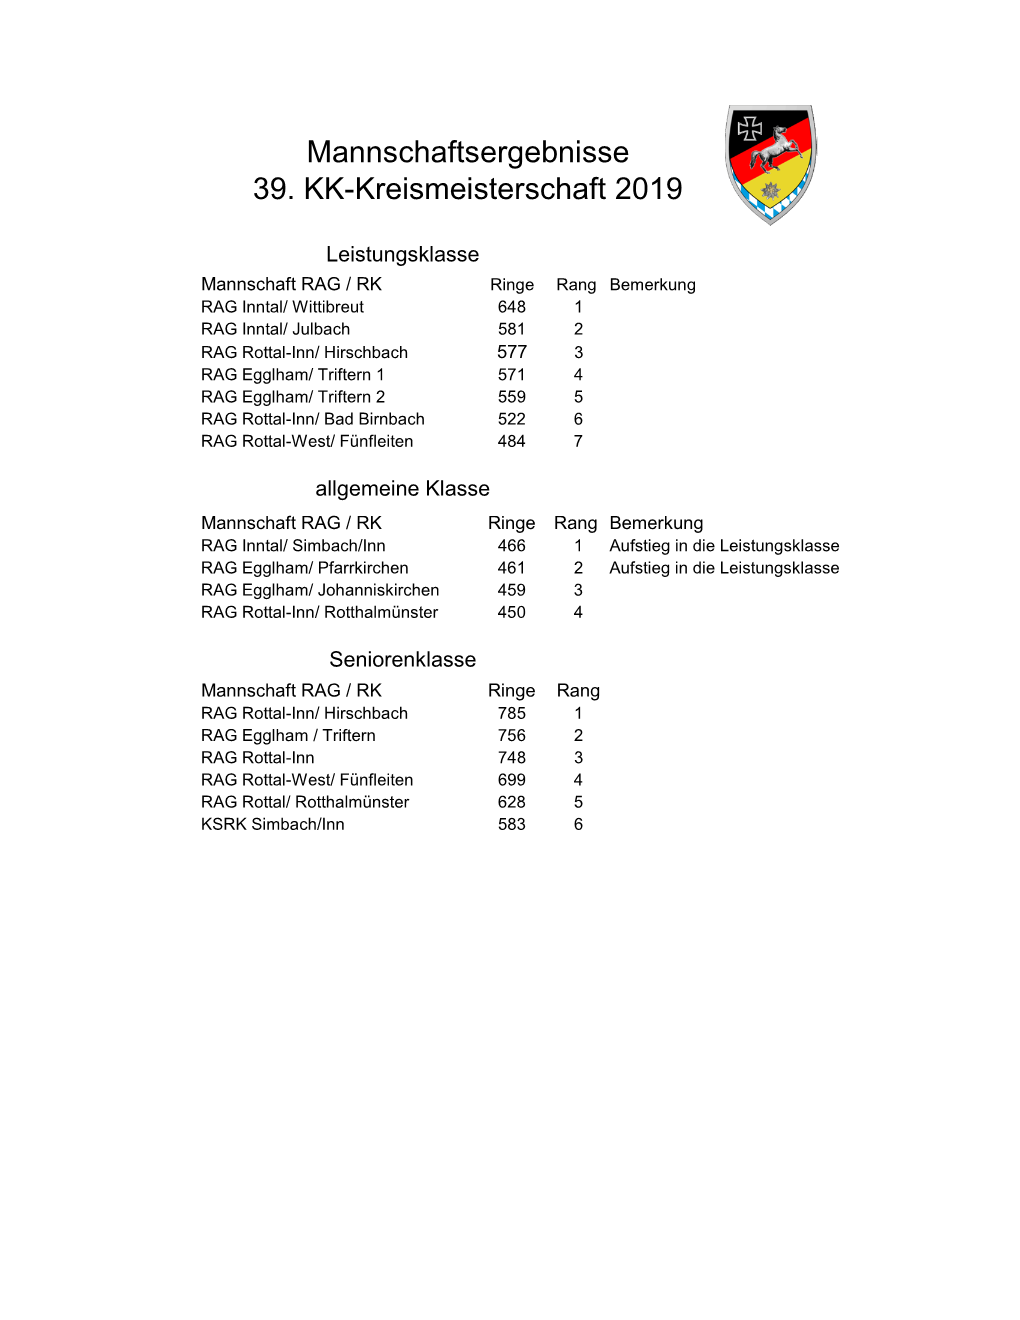 Mannschaftsergebnisse 39. KK-Kreismeisterschaft 2019